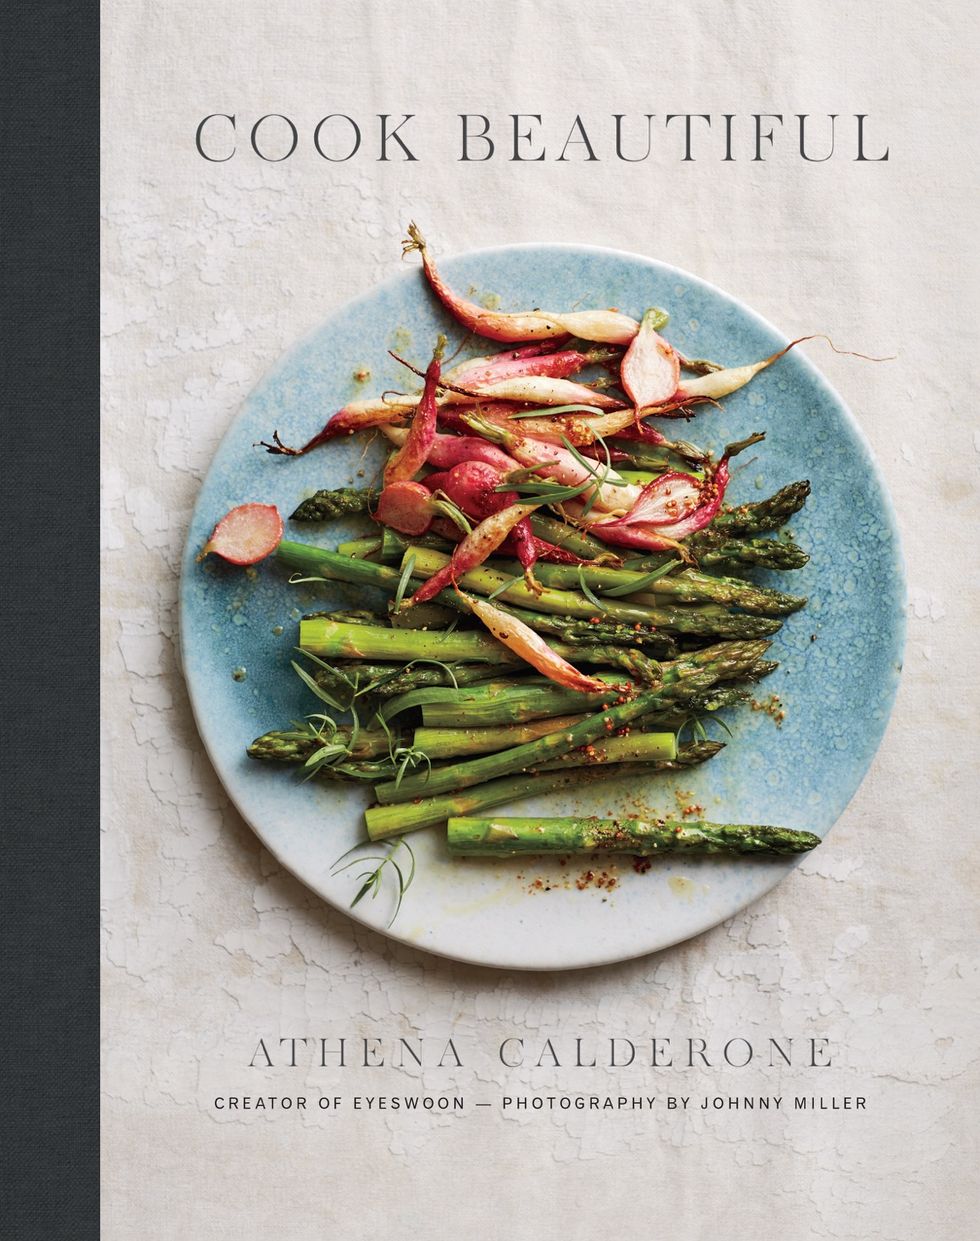 Cook Beautiful by Athena Calderone